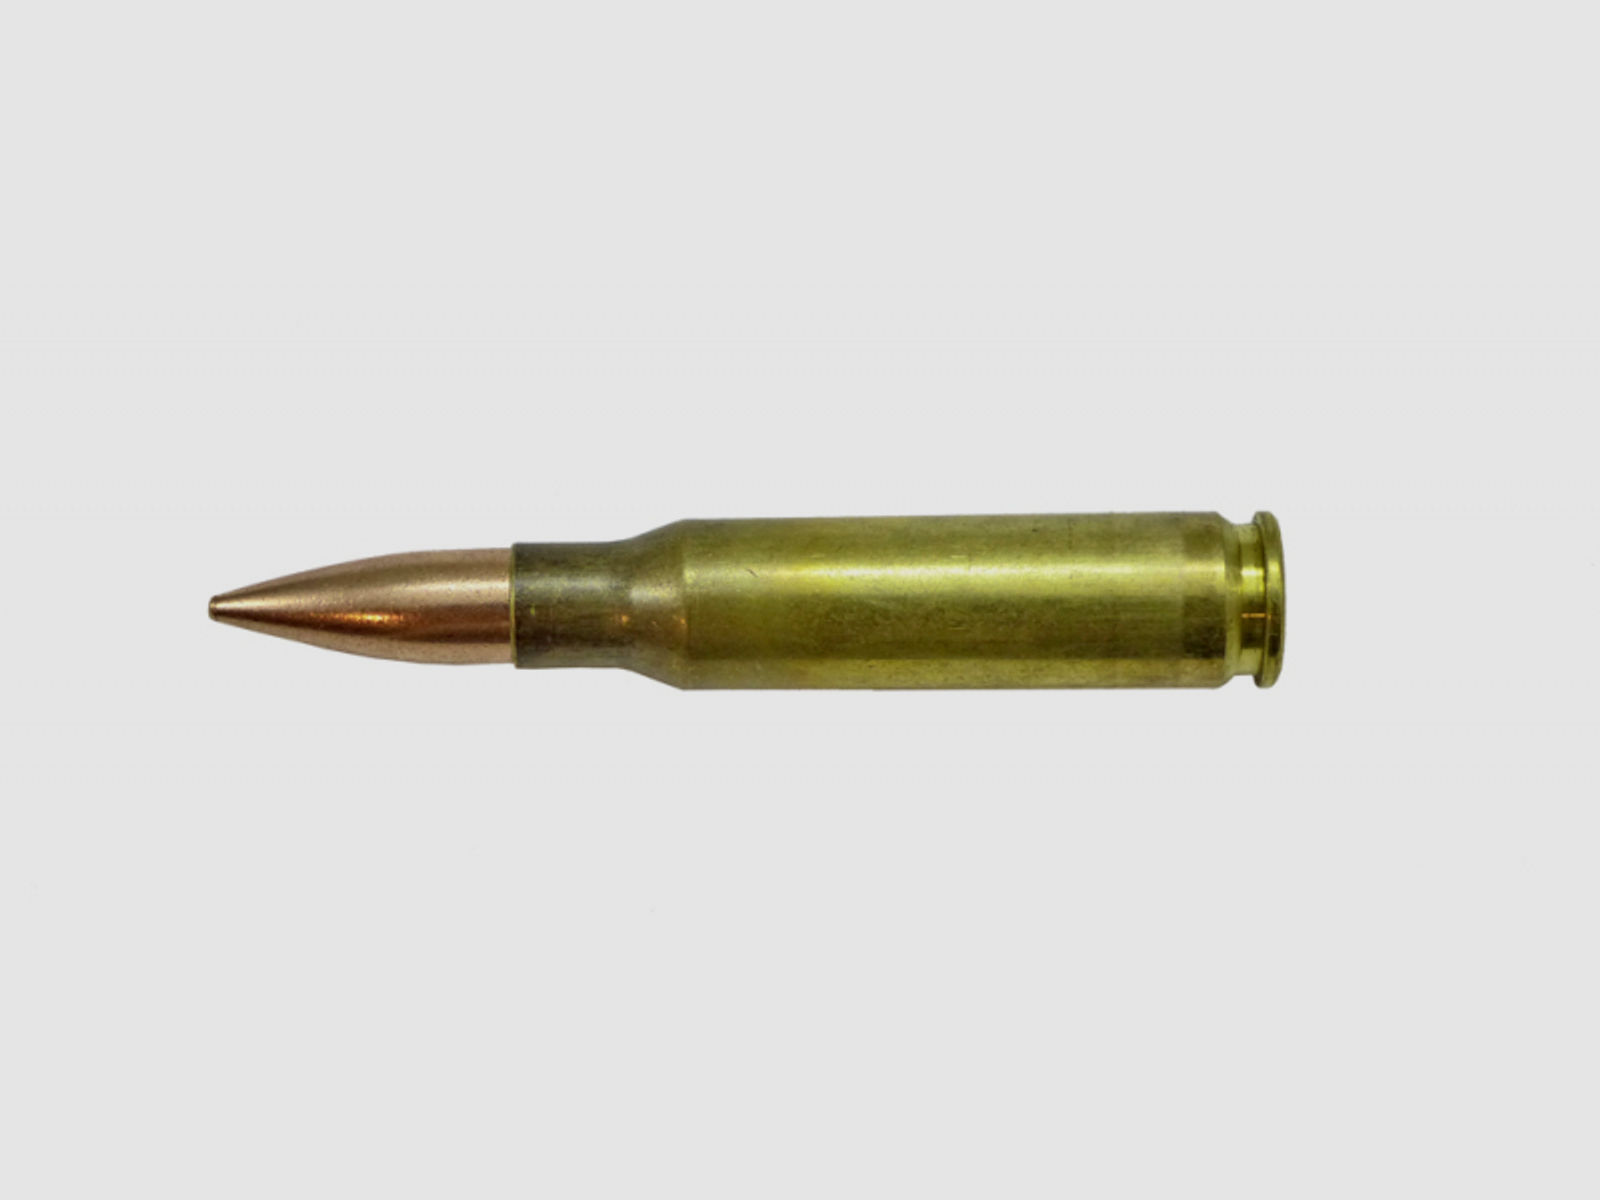 DEKO NATO Patrone 7,62 x 51 (.308 Winchester) für Heckler & Koch G 3, MG 3, MG 42